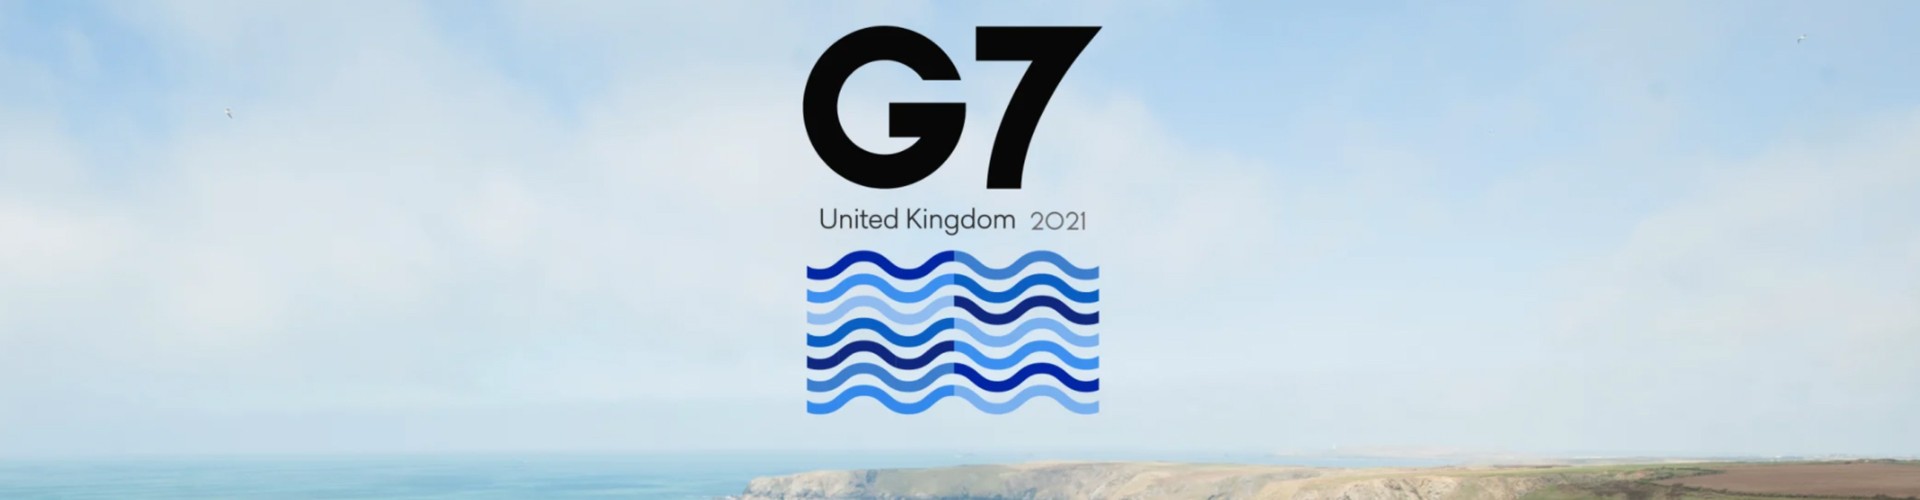 G7 UK Cornwall 